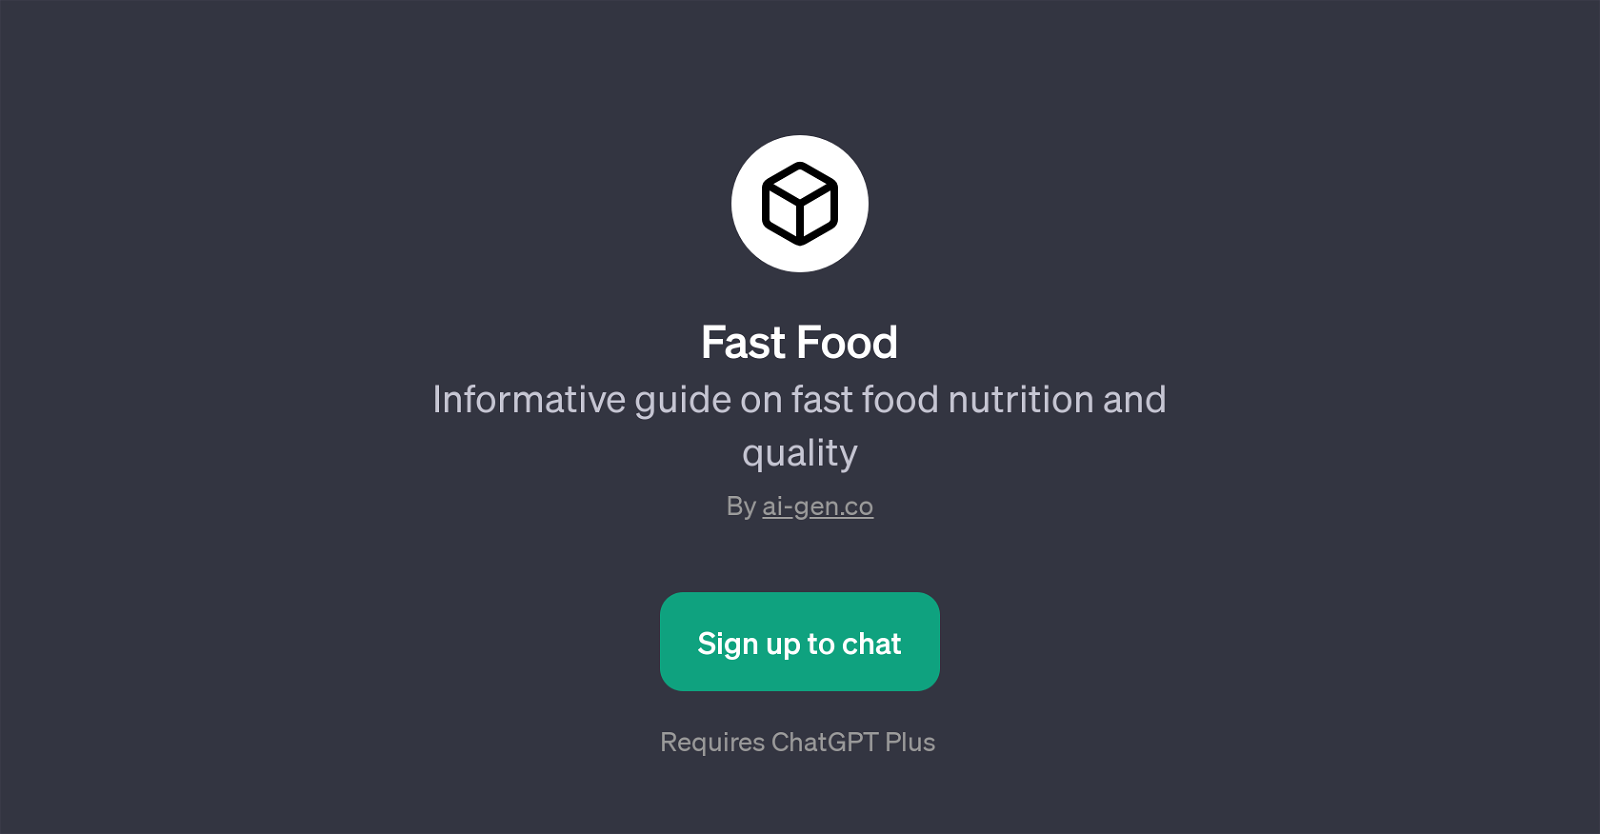 Fast Food website